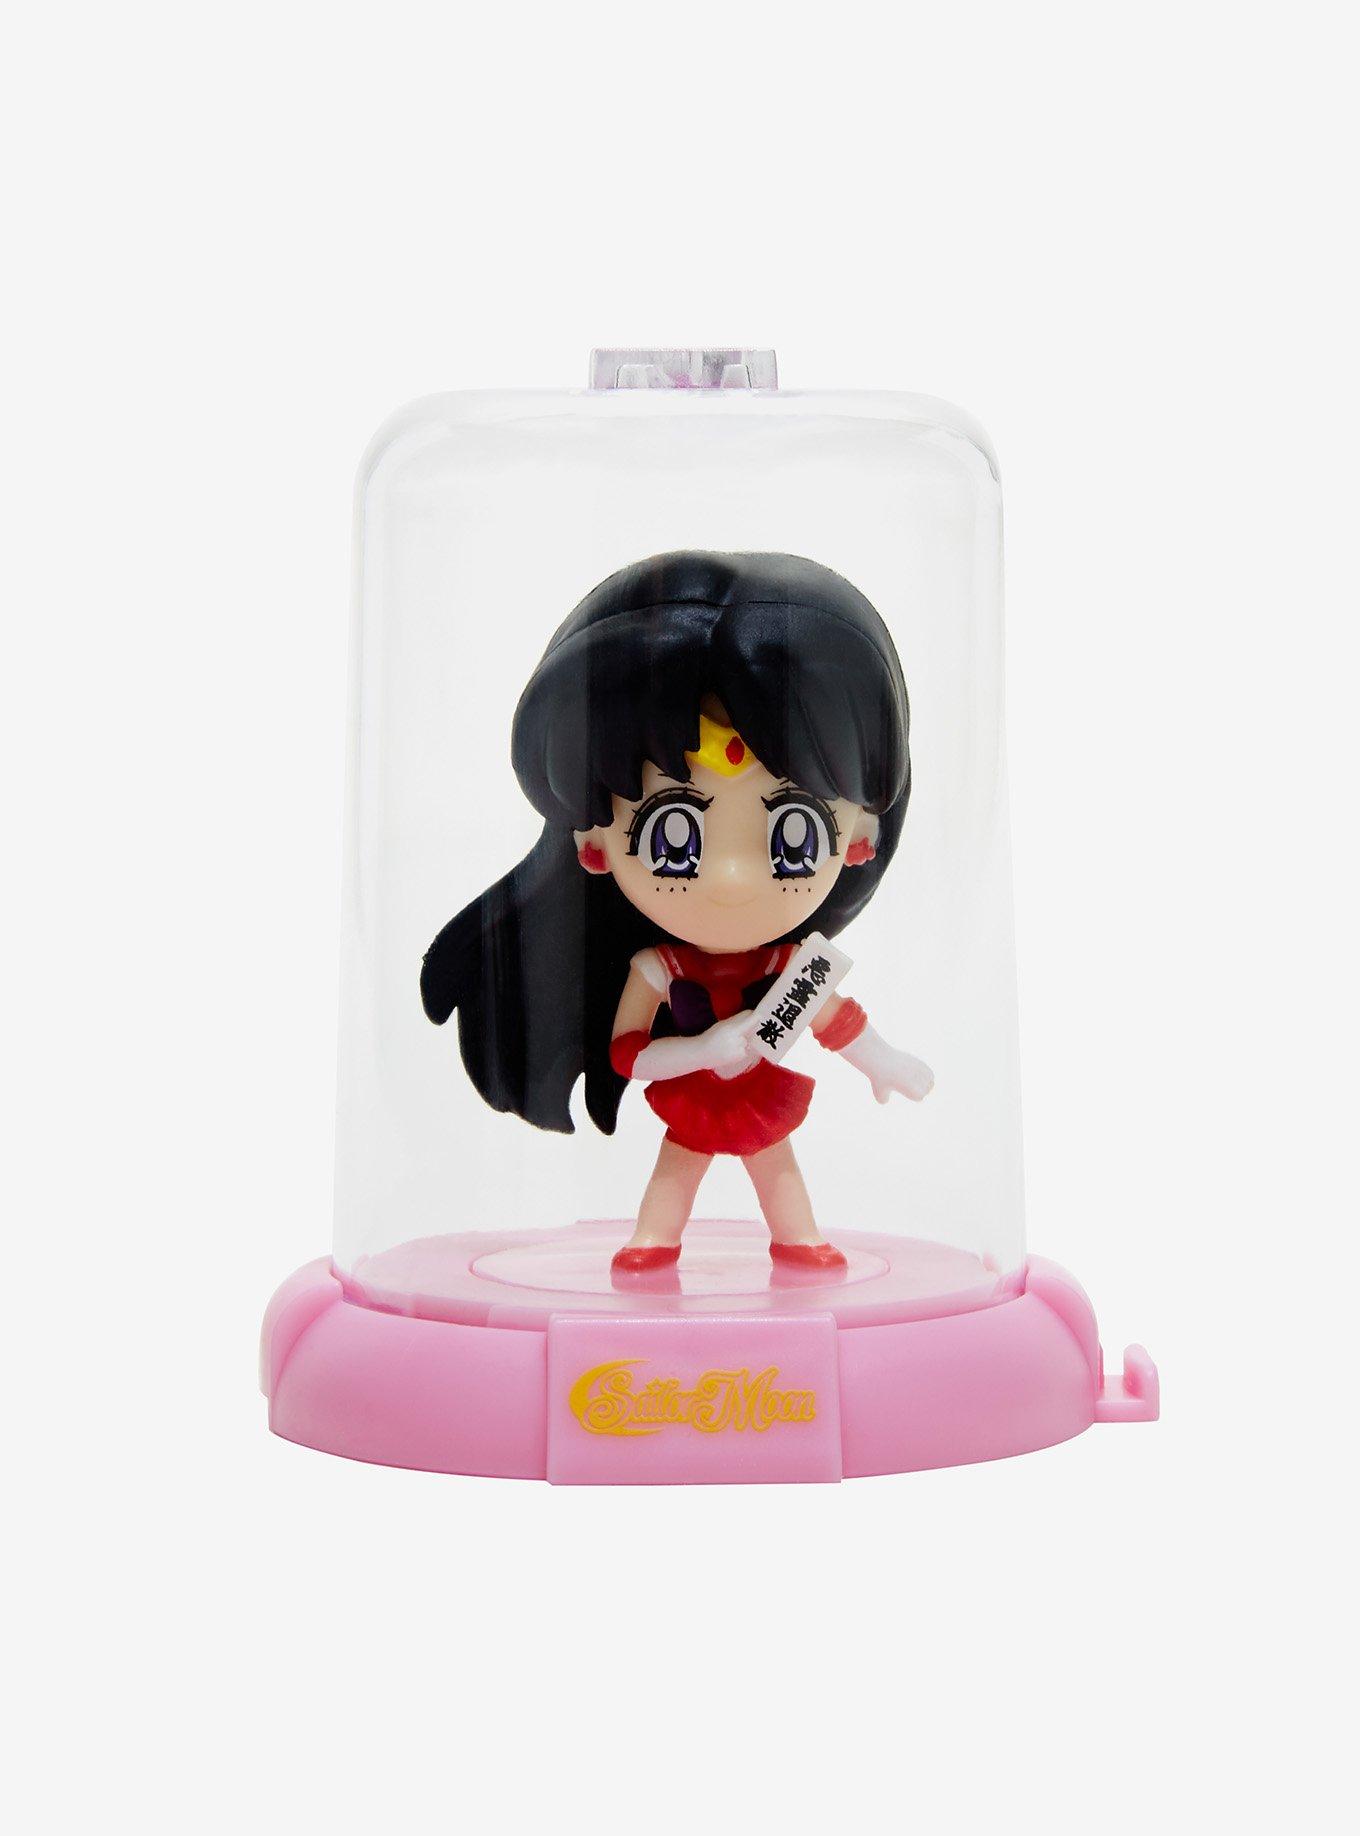 Sailor Moon Domez Blind Bag Collectible Mini Figures Series 1, , alternate